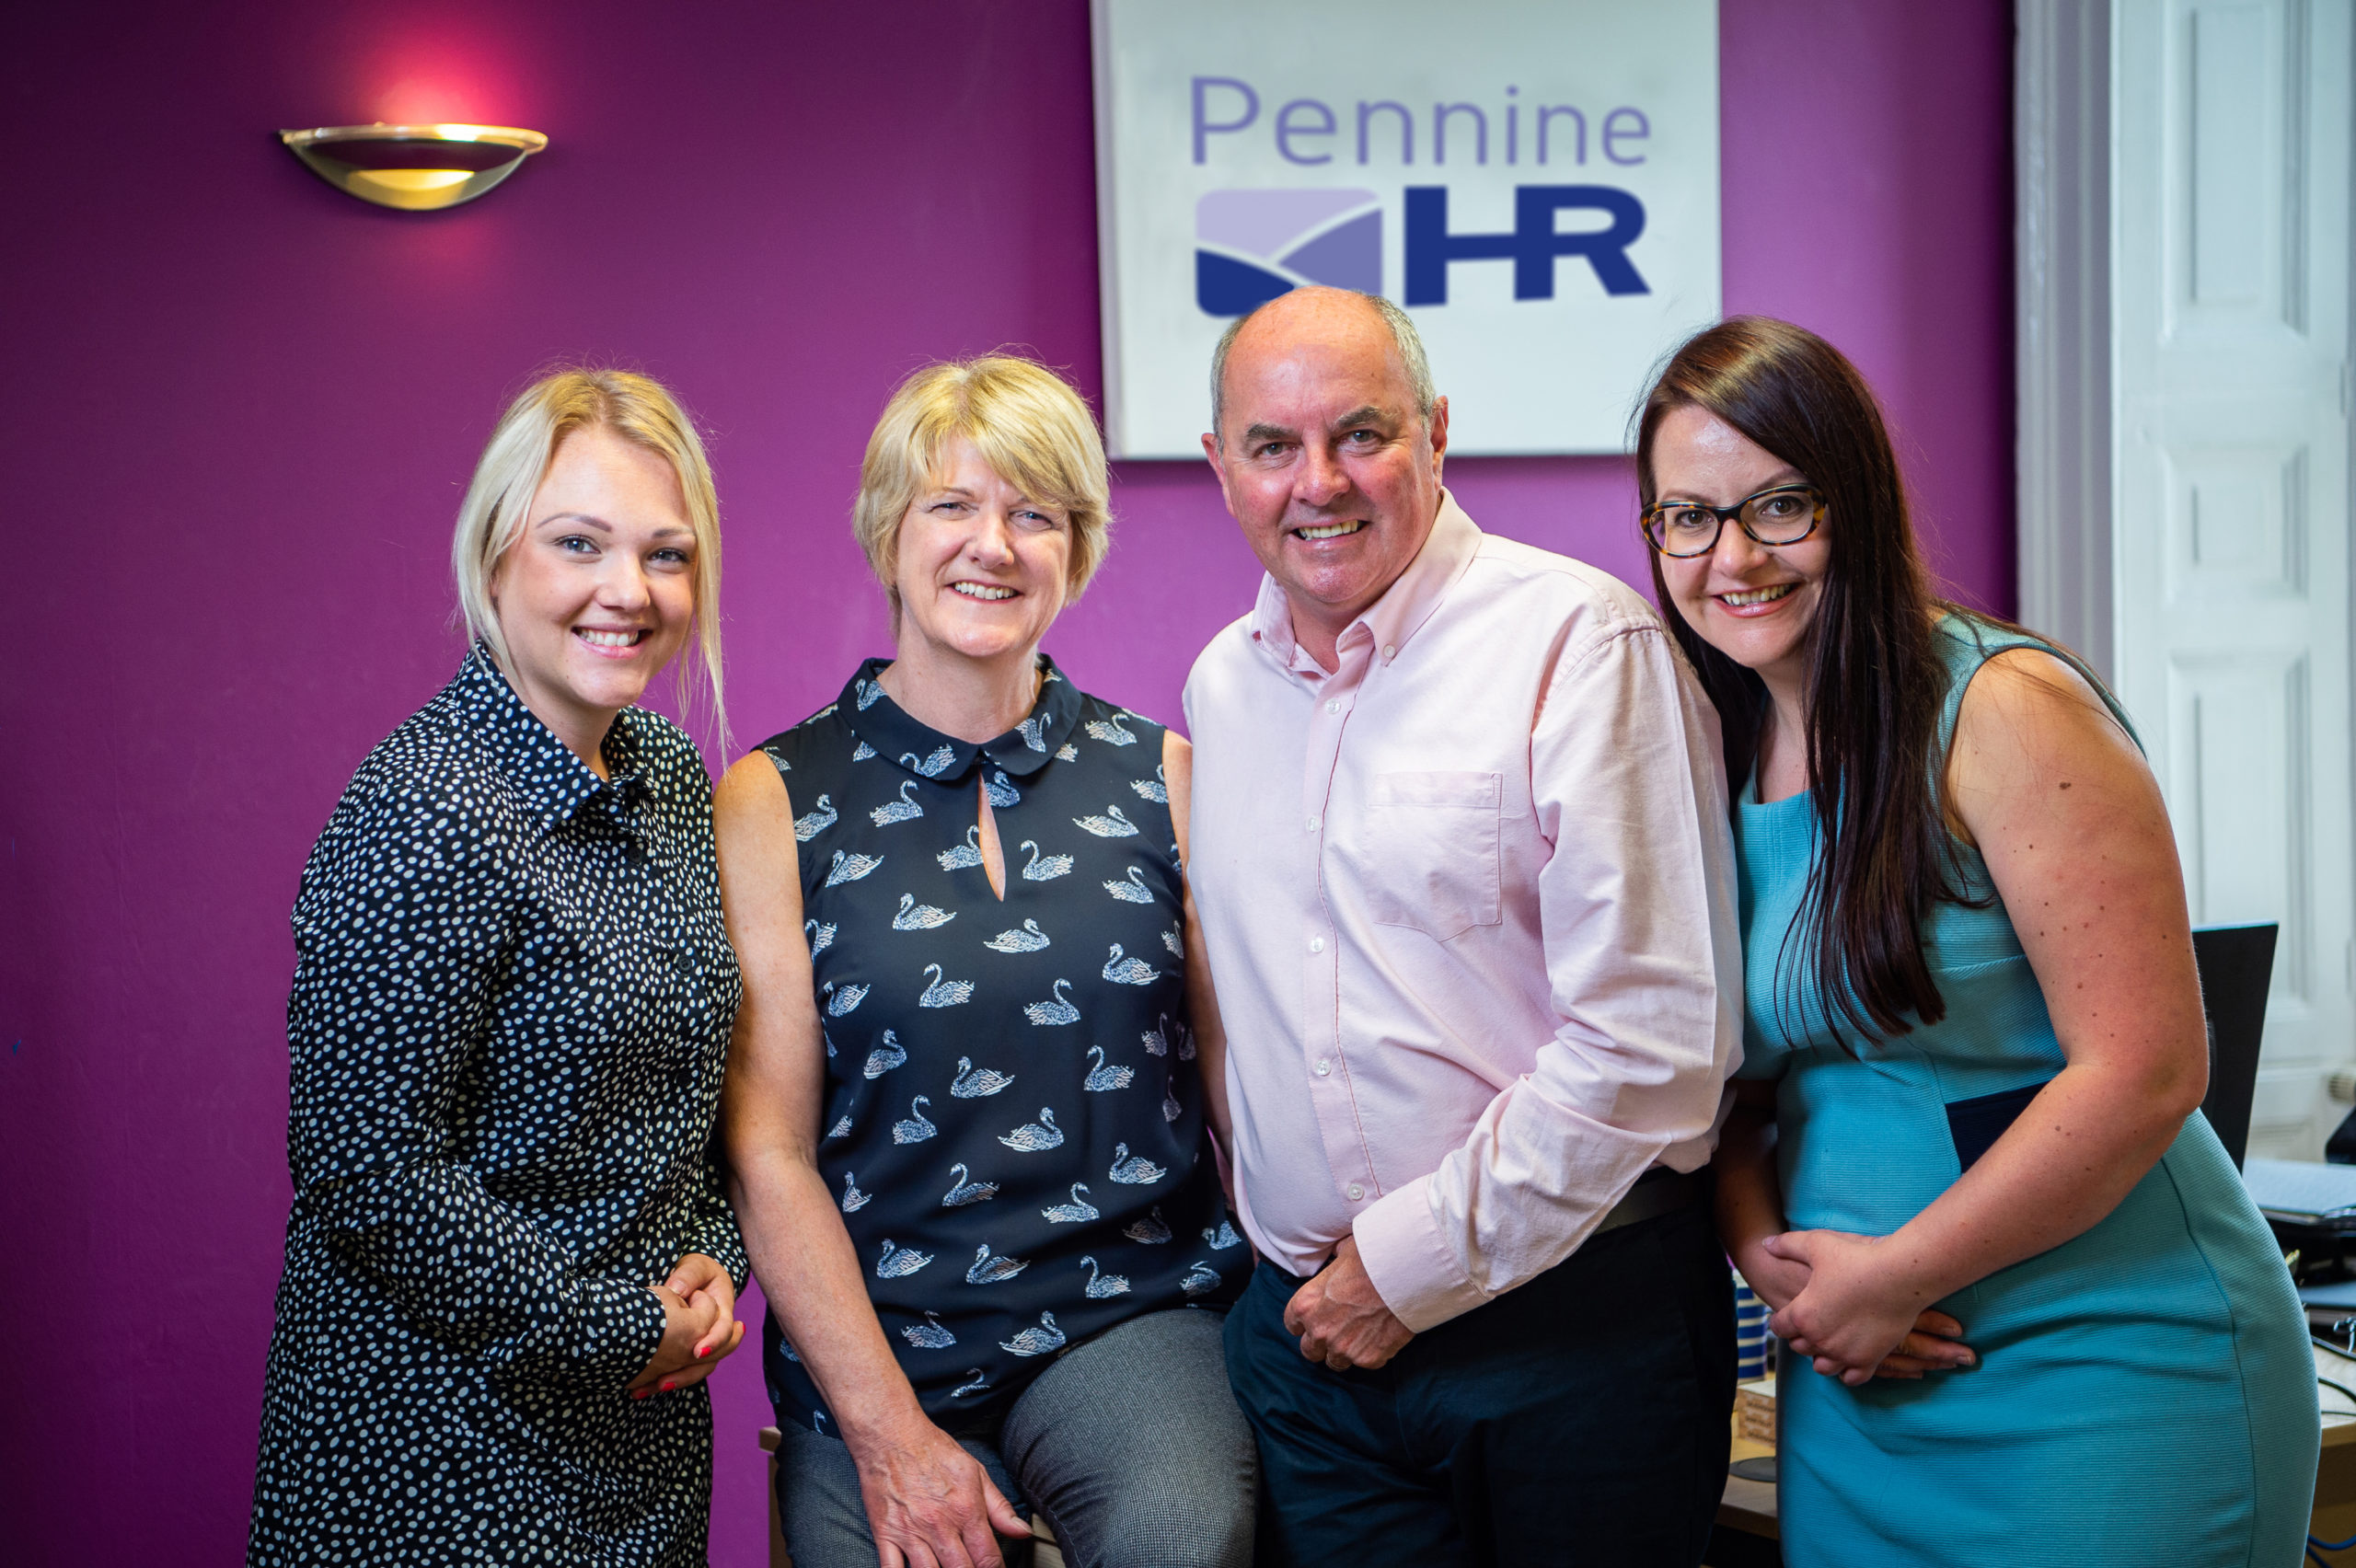 Team Pennine HR providing blue chip quality HR Support